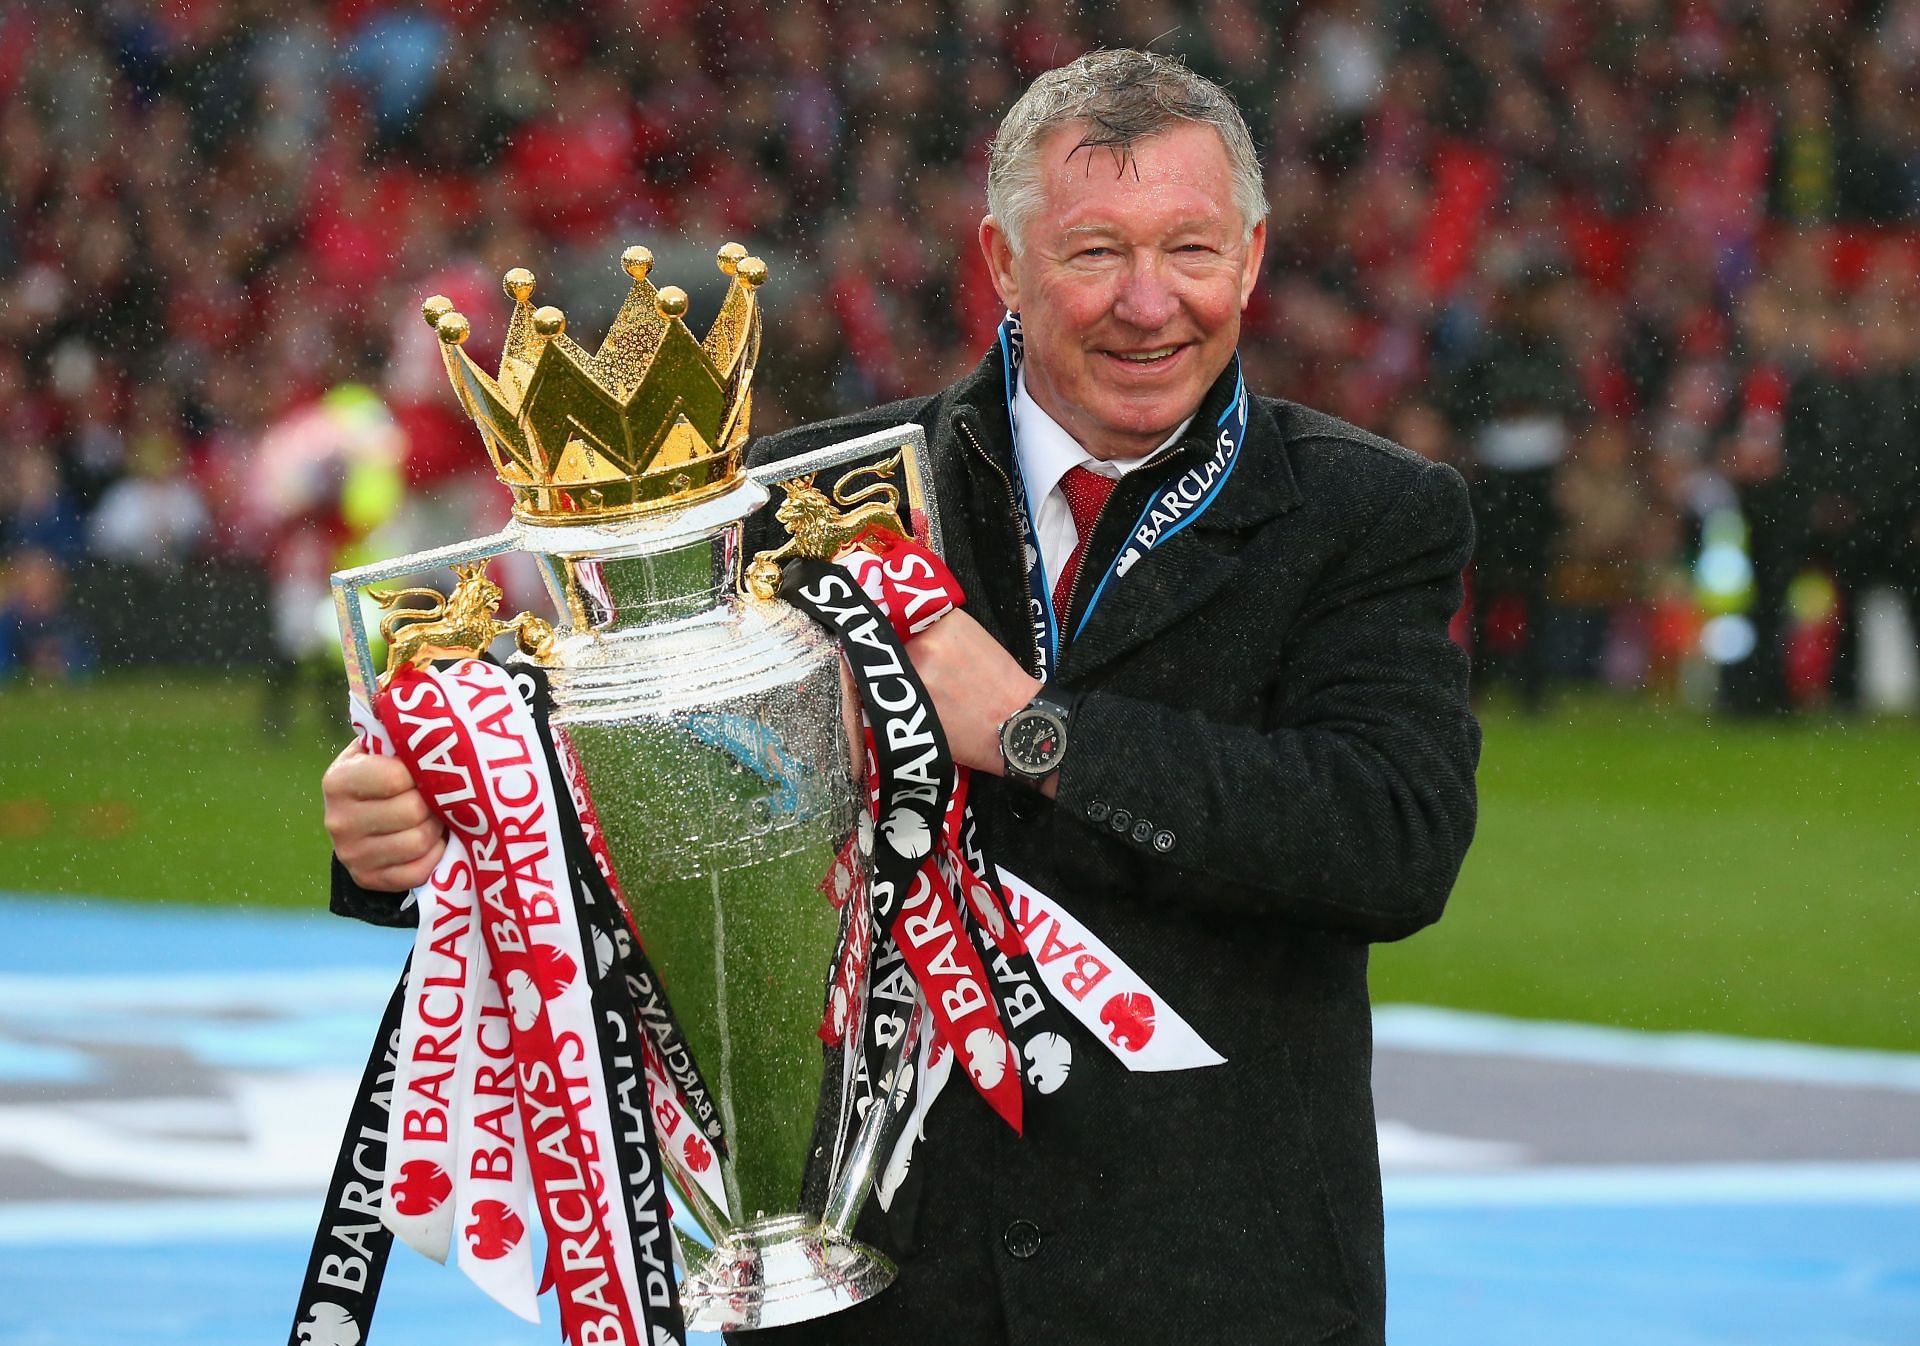 Sir Alex Ferguson was a huge success at Manchester United